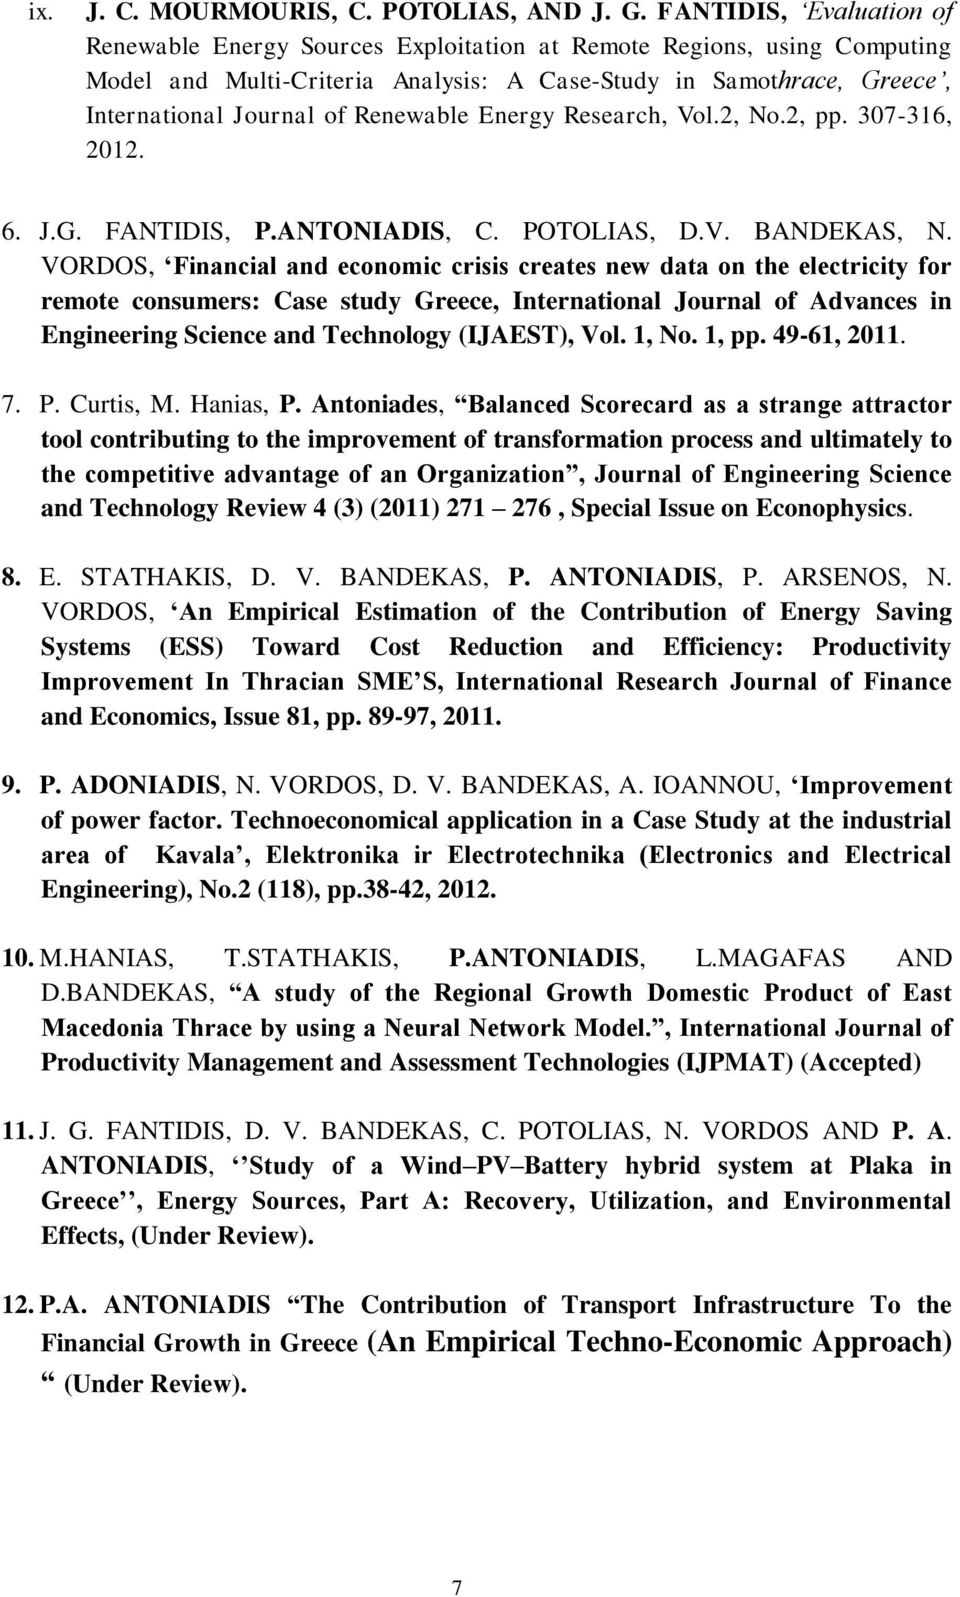 Renewable Energy Research, Vol.2, No.2, pp. 307-316, 2012. 6. J.G. FANTIDIS, P.ANTONIADIS, C. POTOLIAS, D.V. BANDEKAS, N.